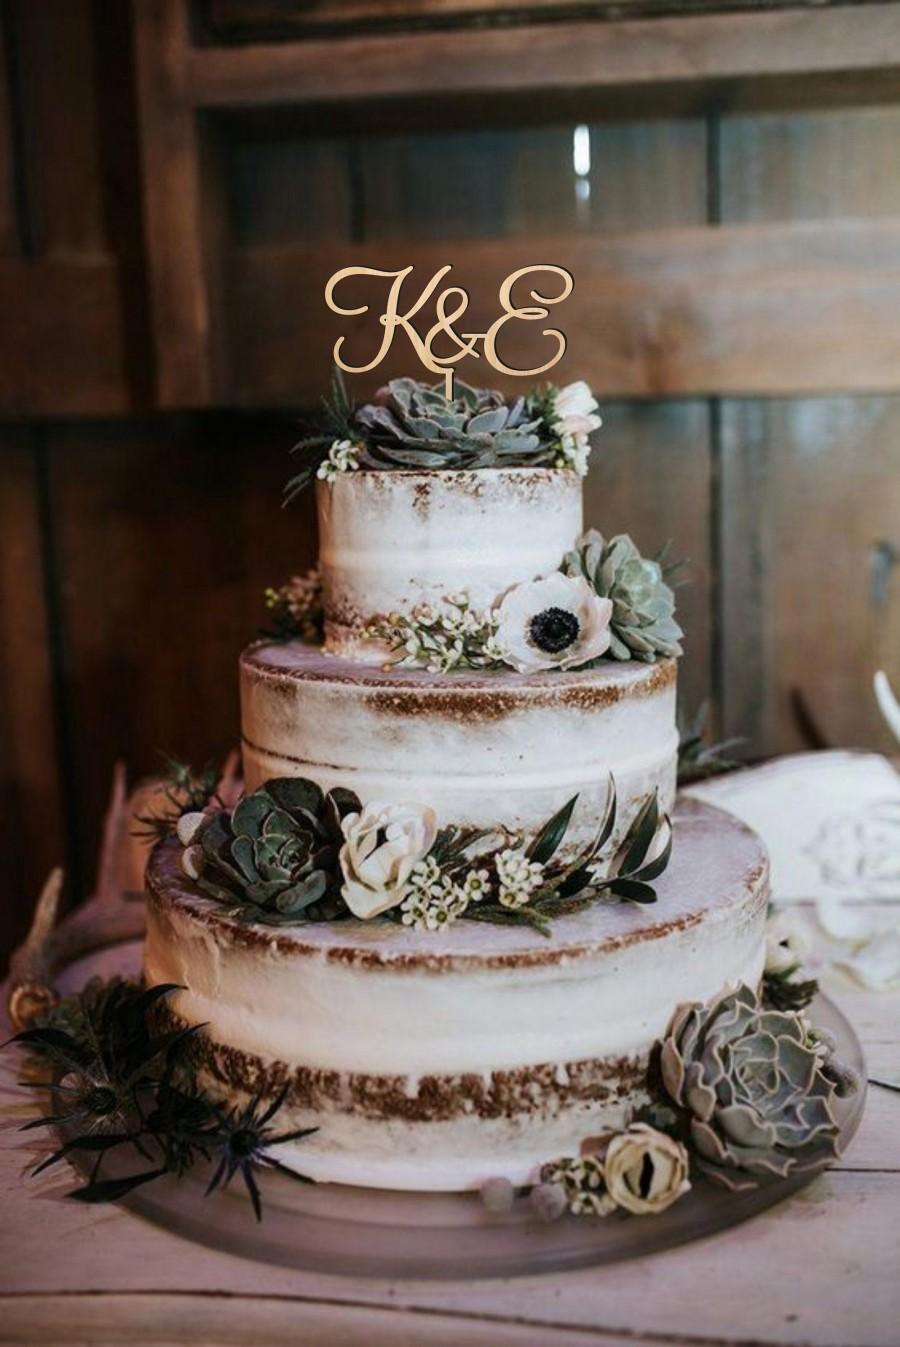 Wedding - Cake topper wedding, letters cake topper, cake topper for wedding, wooden cake topper, gold or silver cake topper, rustic cake topper